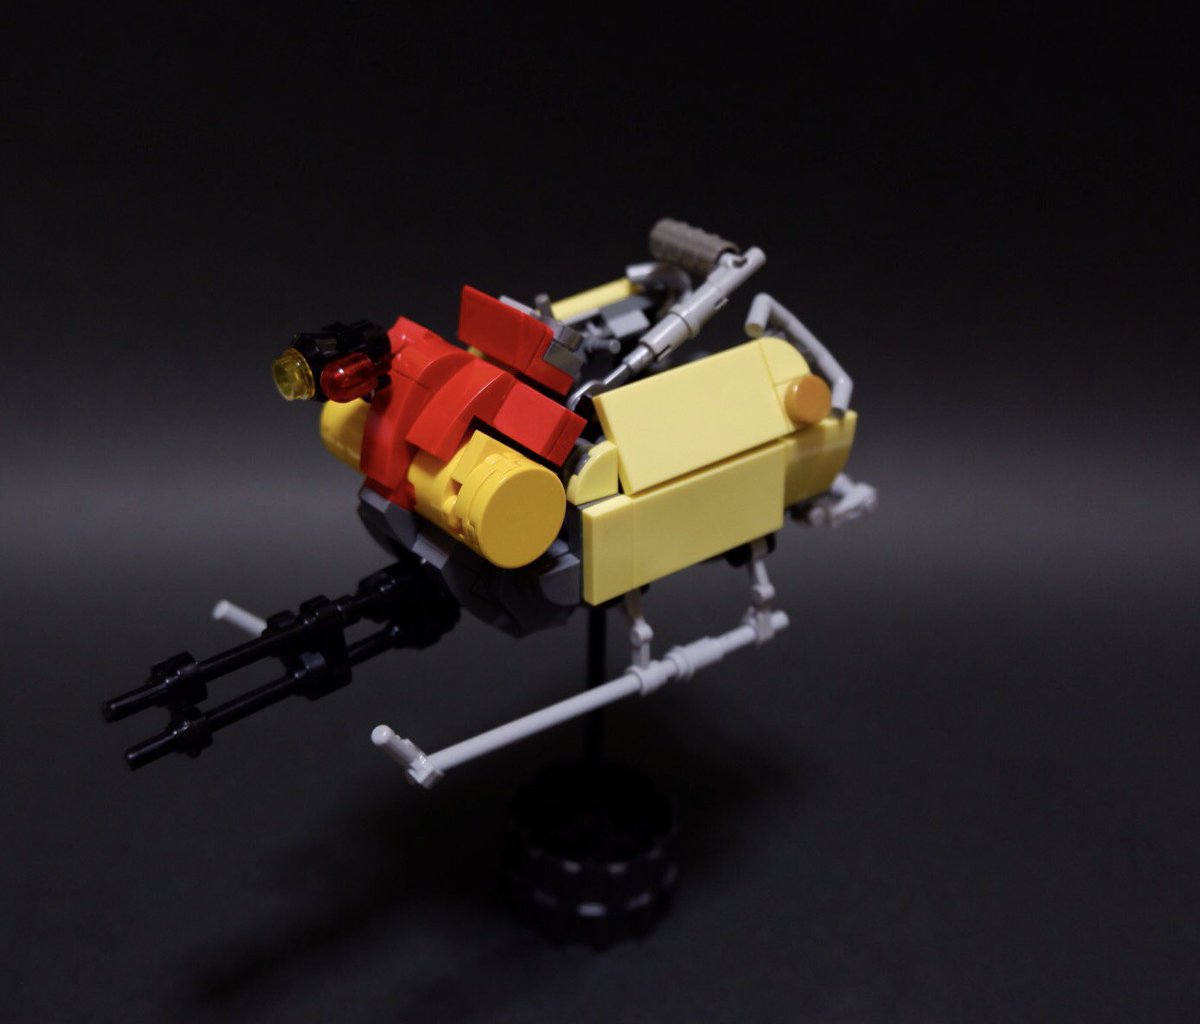 Piro Pa Twitter Lego レゴでakiraのフライングプラットフォームを作りました I Made Akira S Flying Platform With Lego Lego レゴ Akira Stayhome